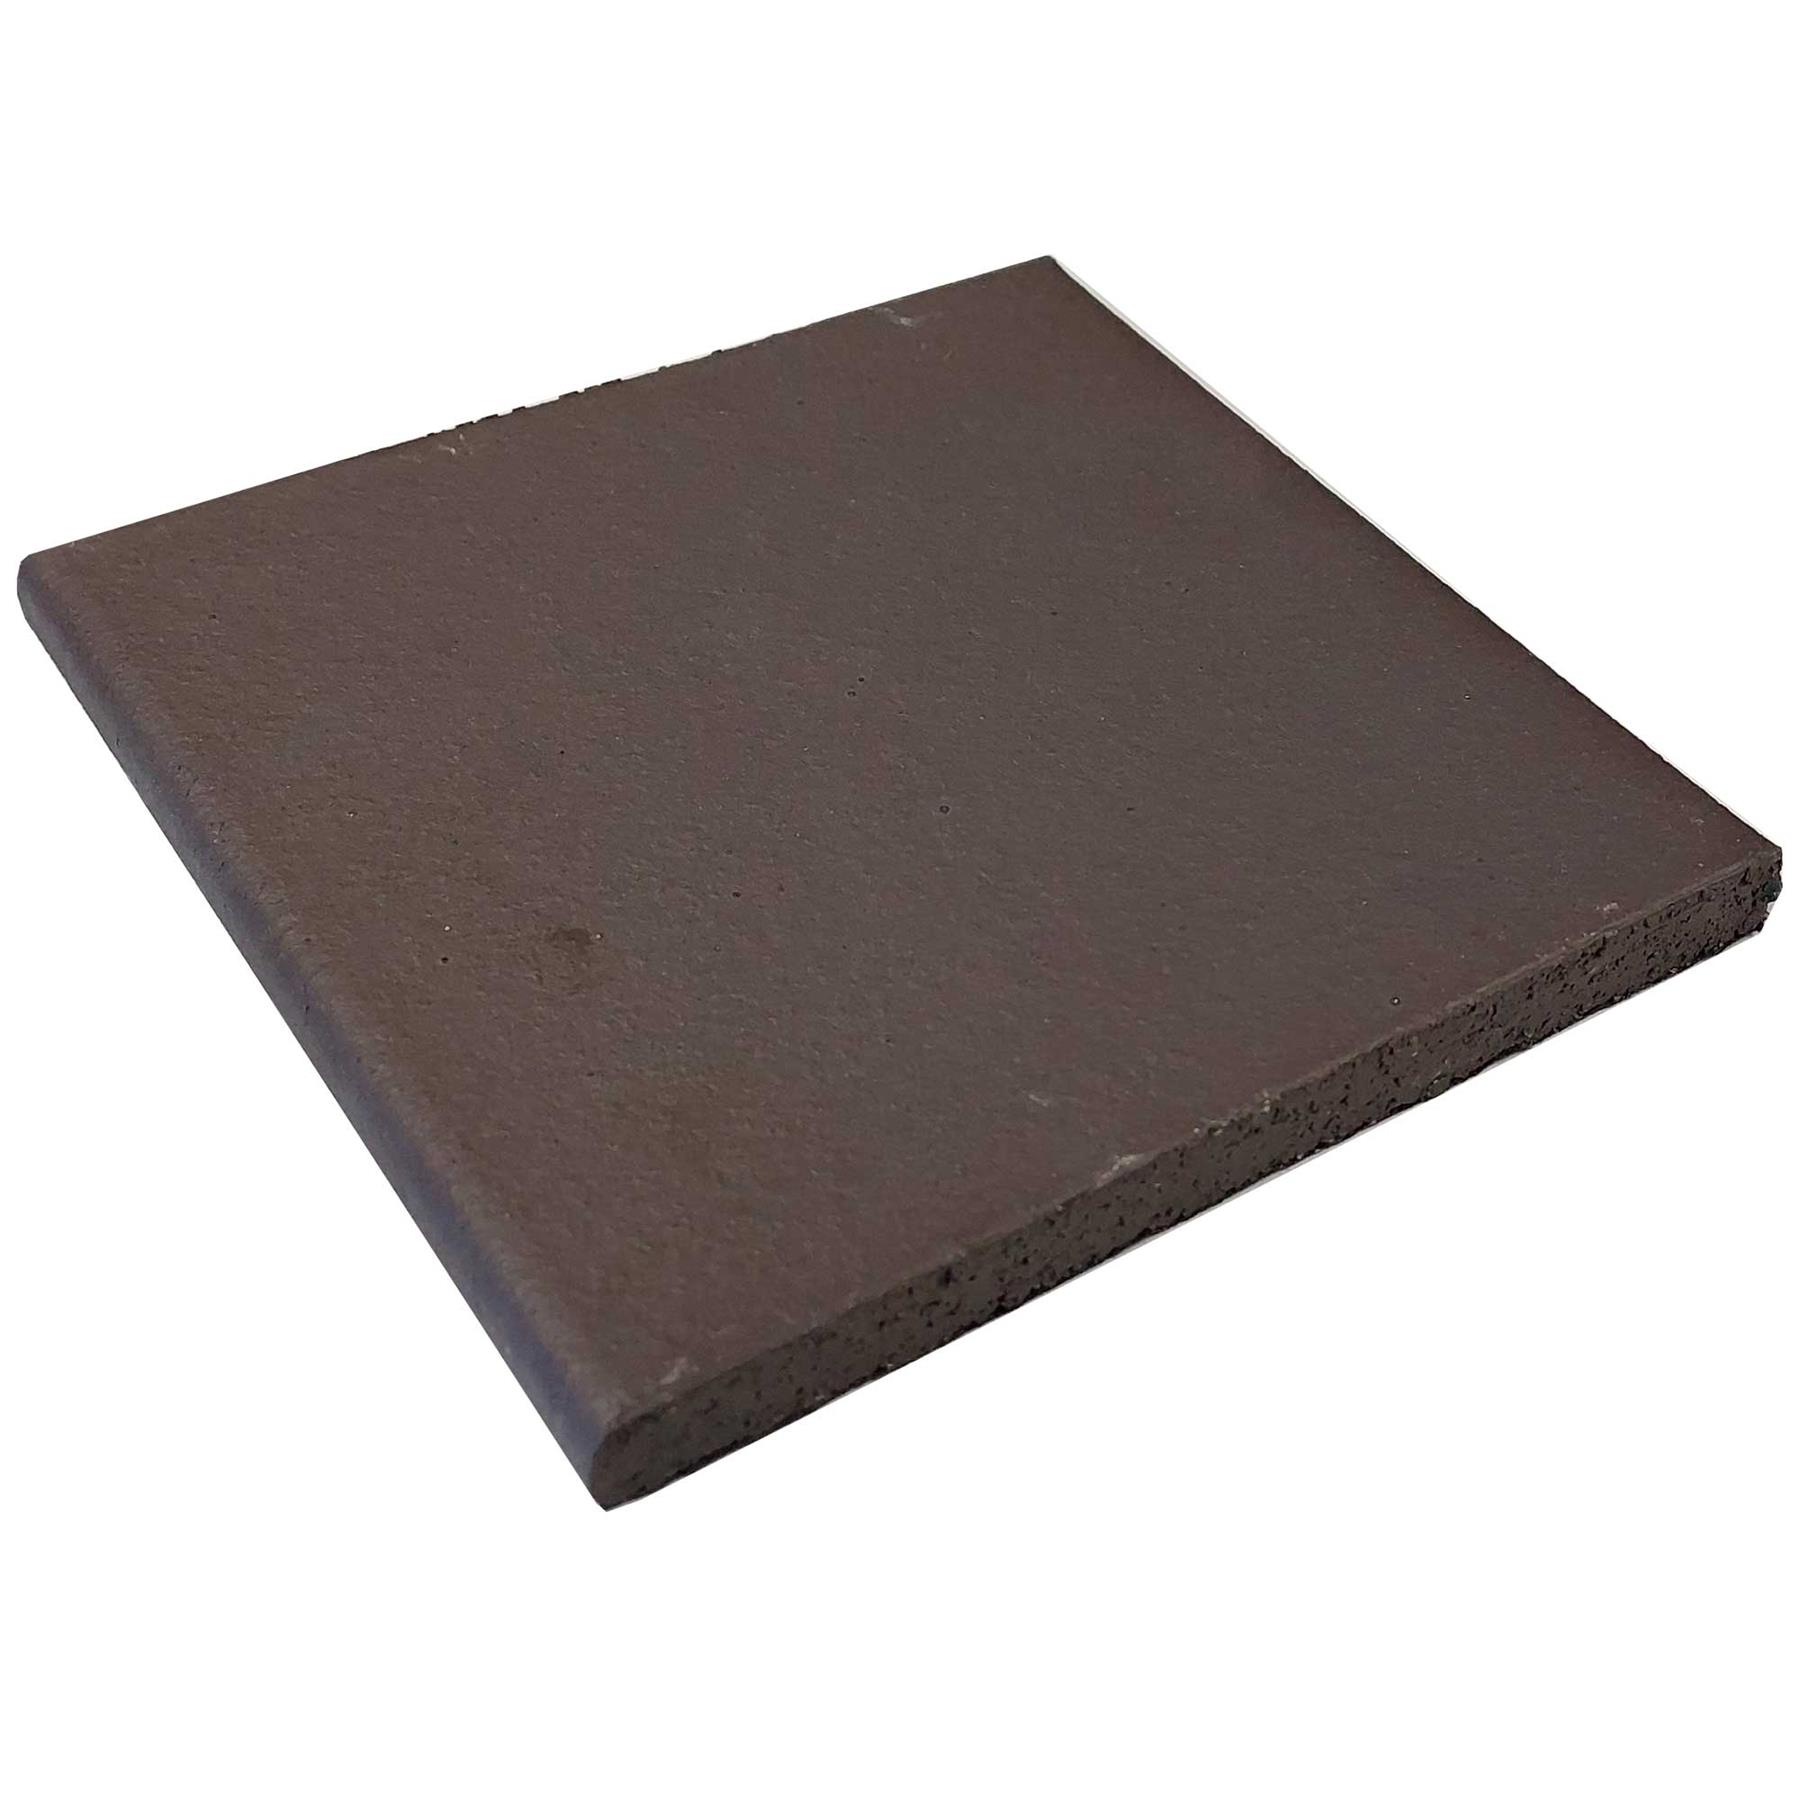 New Authentic Black Brown Quarry Tiles Round Edge 150x150mm